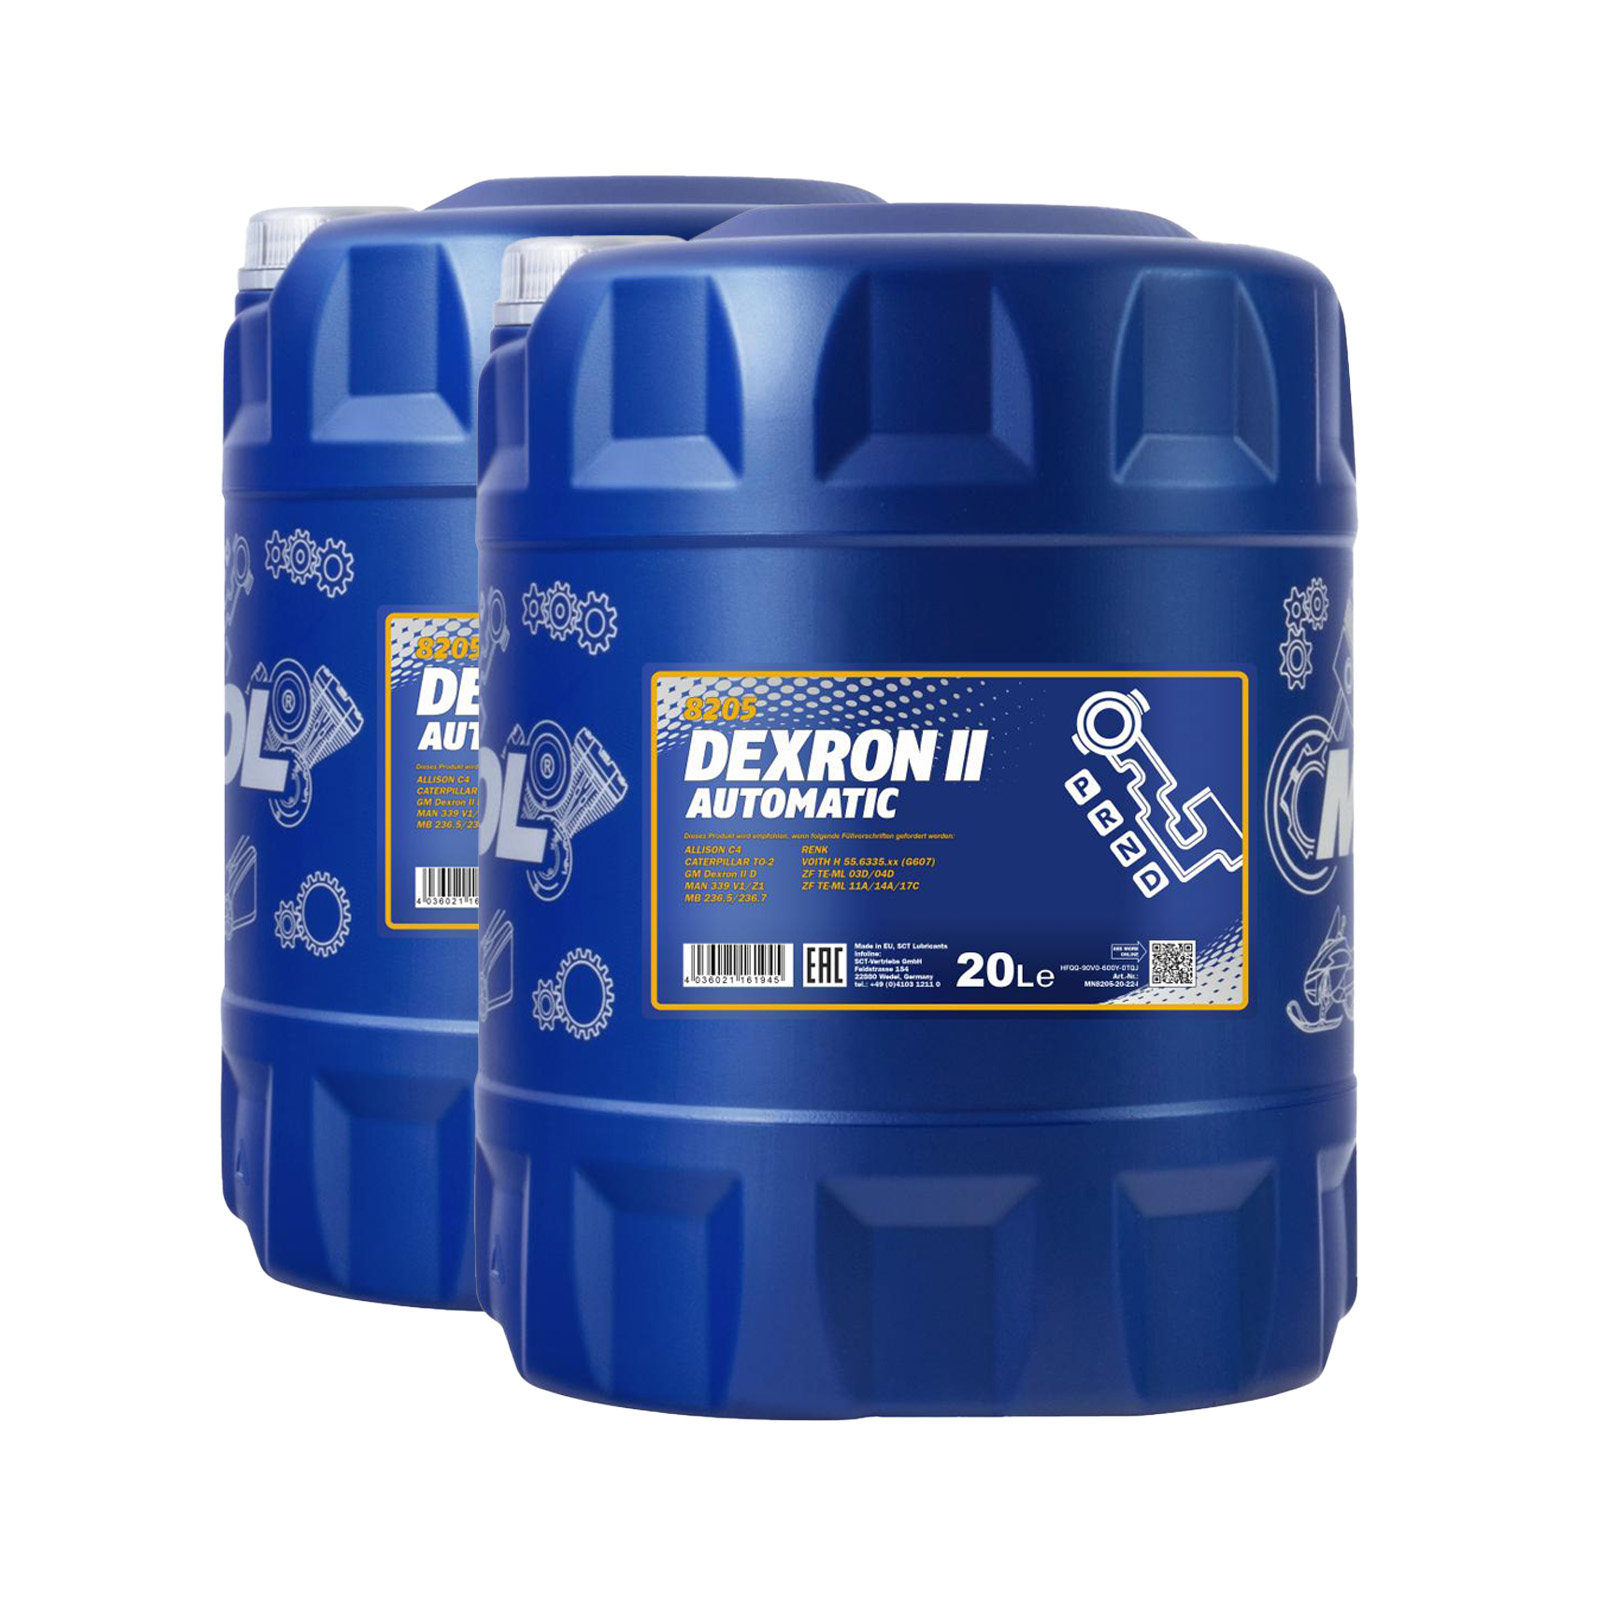 40 Liter MANNOL Dexron II Automatic Getriebeöl Automatikgetriebe Öl